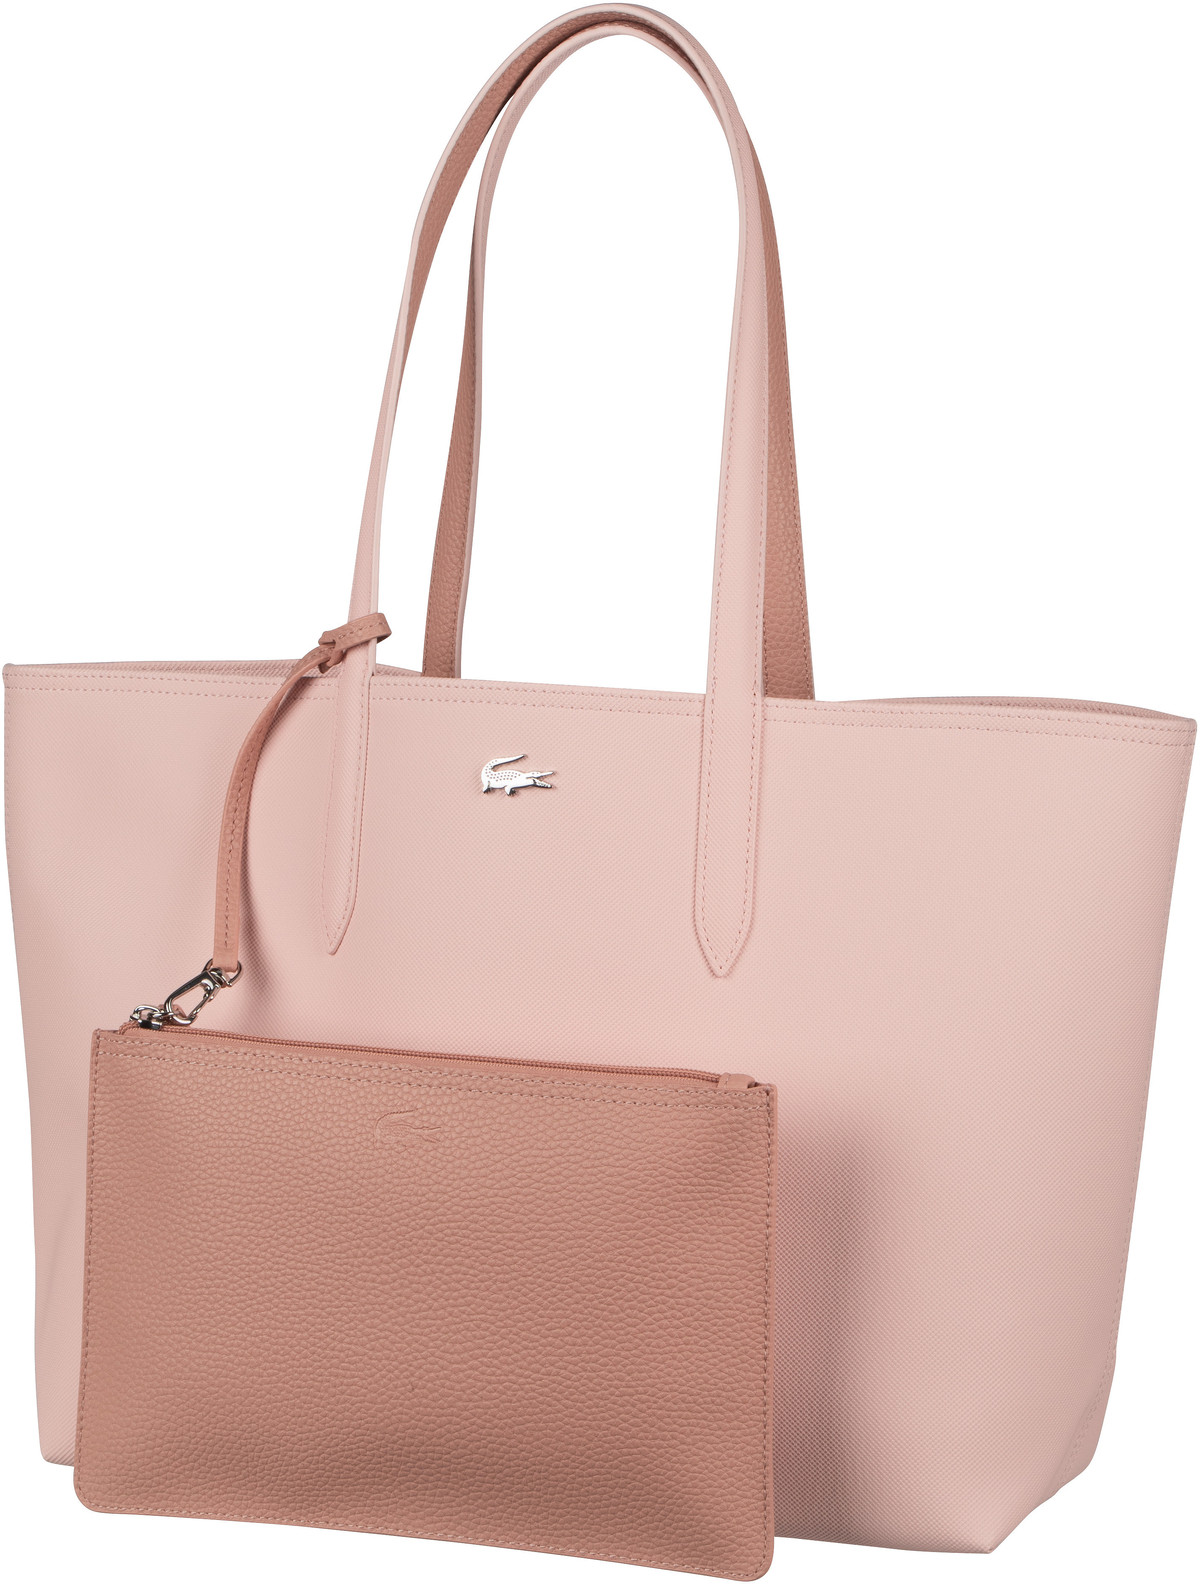 Lacoste Anna Shopping Bag 2142 - Chair/Amande (innen: Rosa)